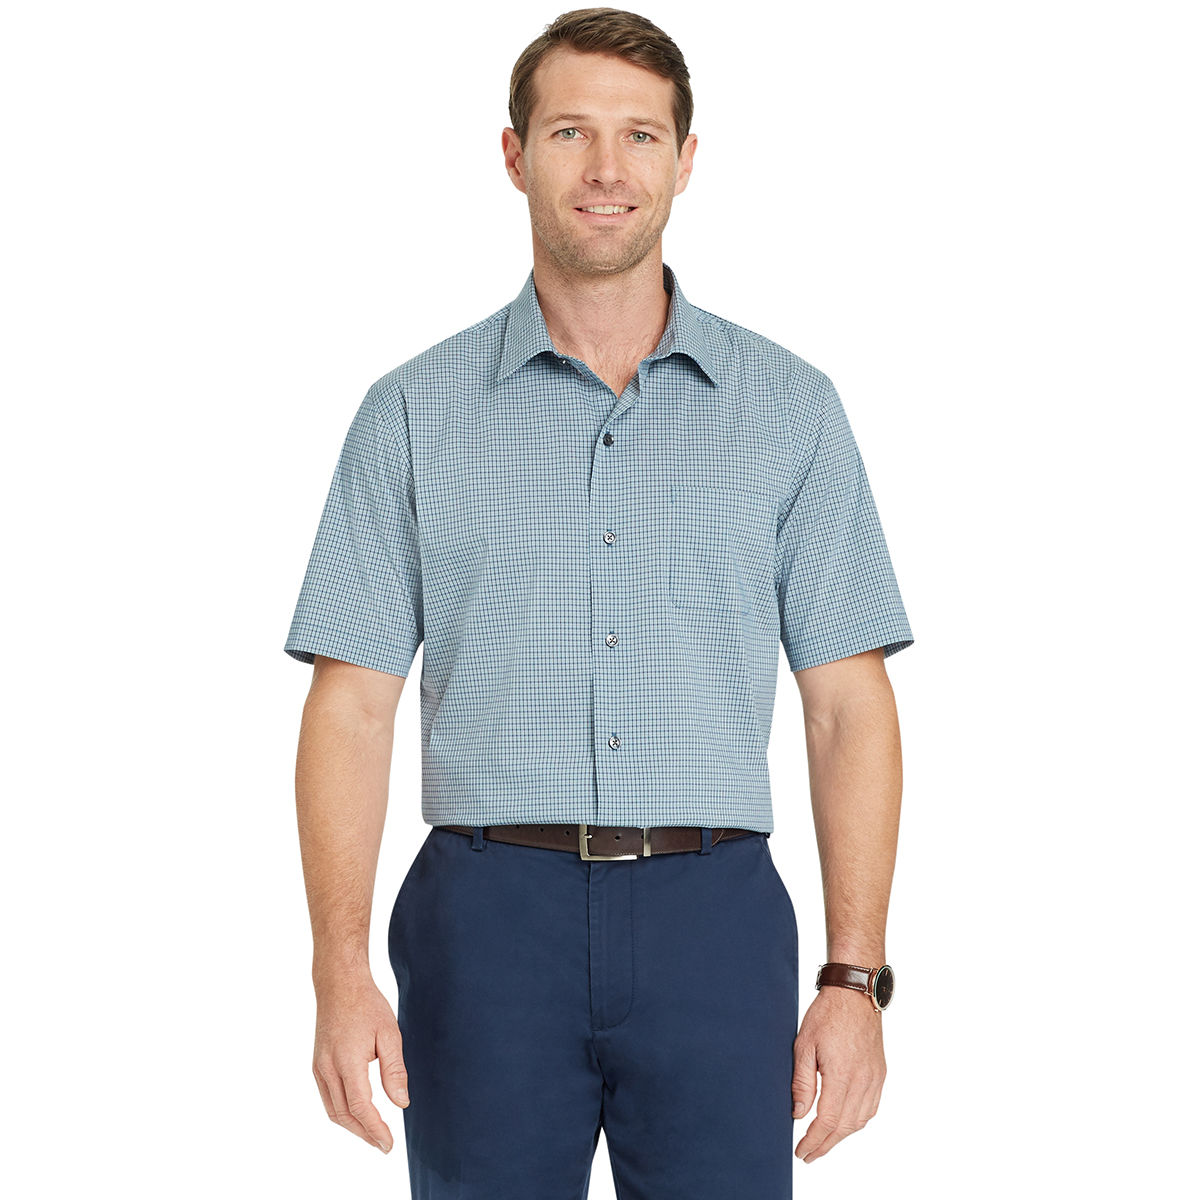 Van Heusen Men's Flex Small Check Short-Sleeve Shirt - Green, L